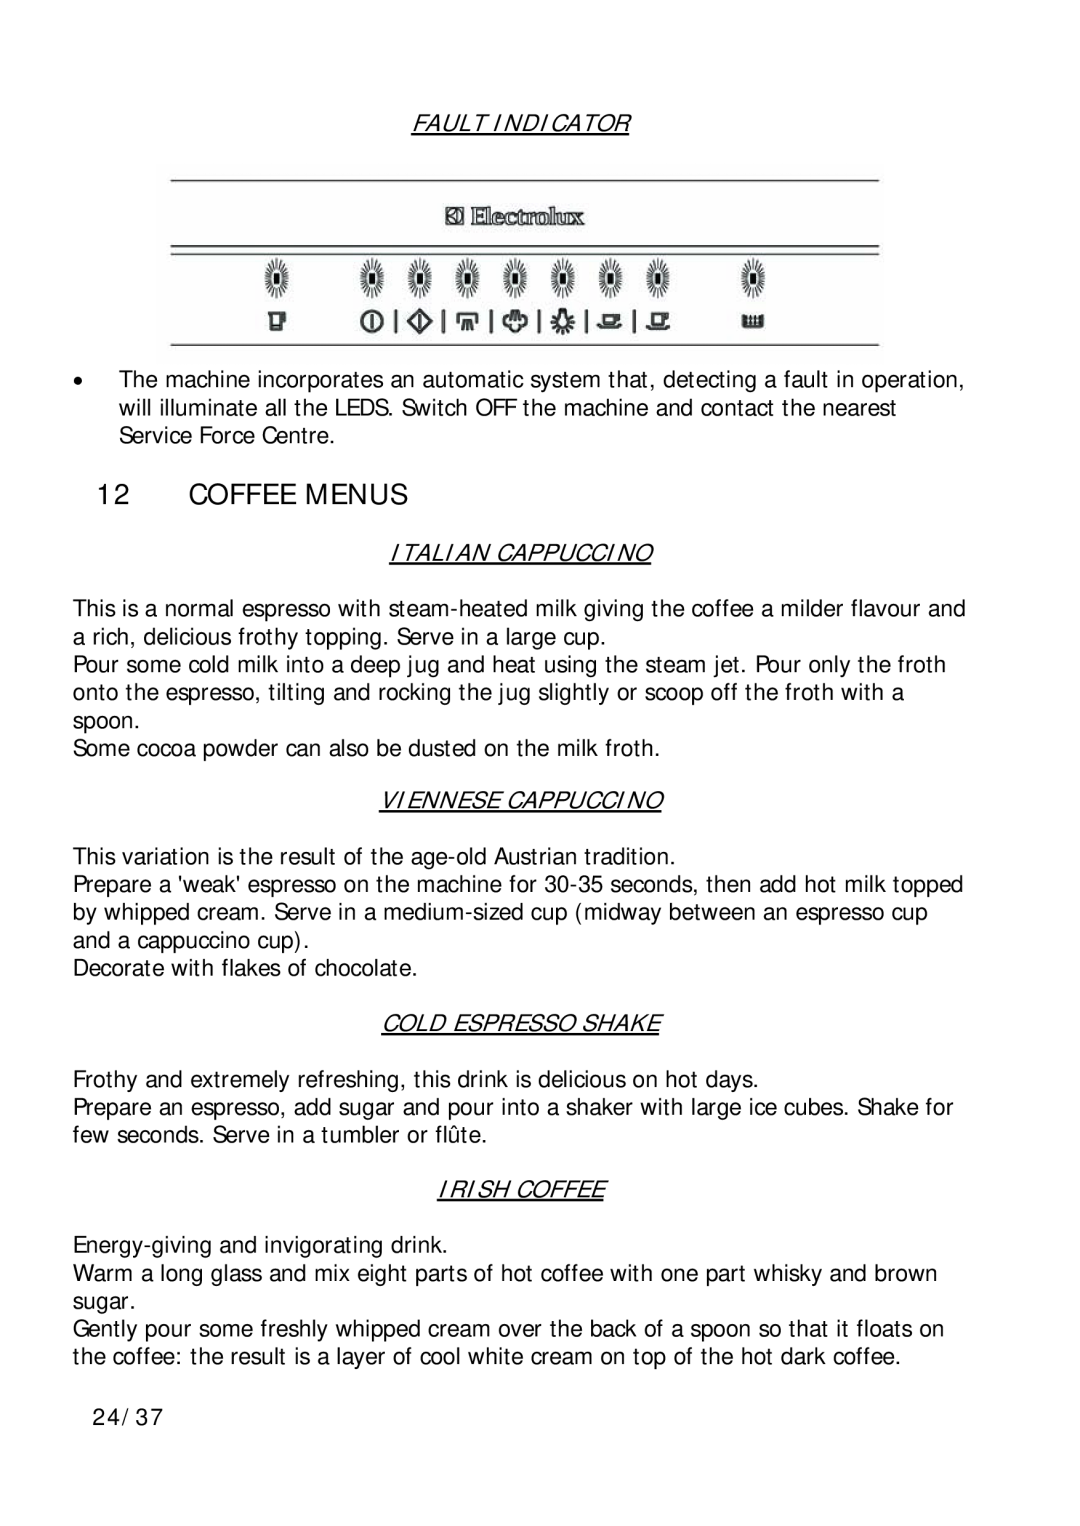 Electrolux EBA 60002X Coffee Menus, Fault Indicator, Italian Cappuccino, Viennese Cappuccino, Cold Espresso Shake 